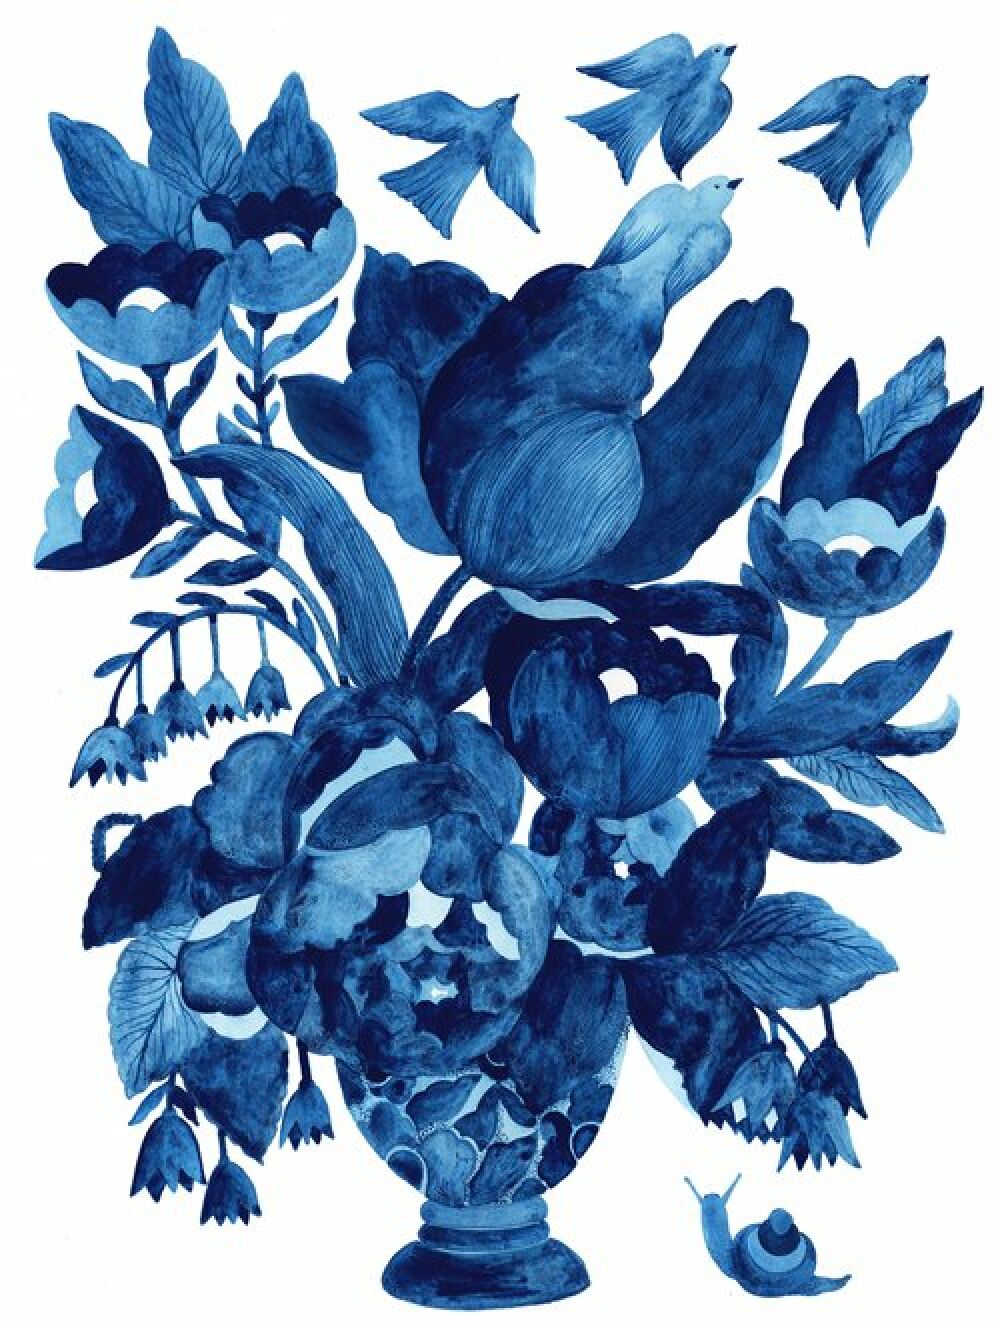 Handpainted flower motif by the illustrator Malin Gyllensvaan